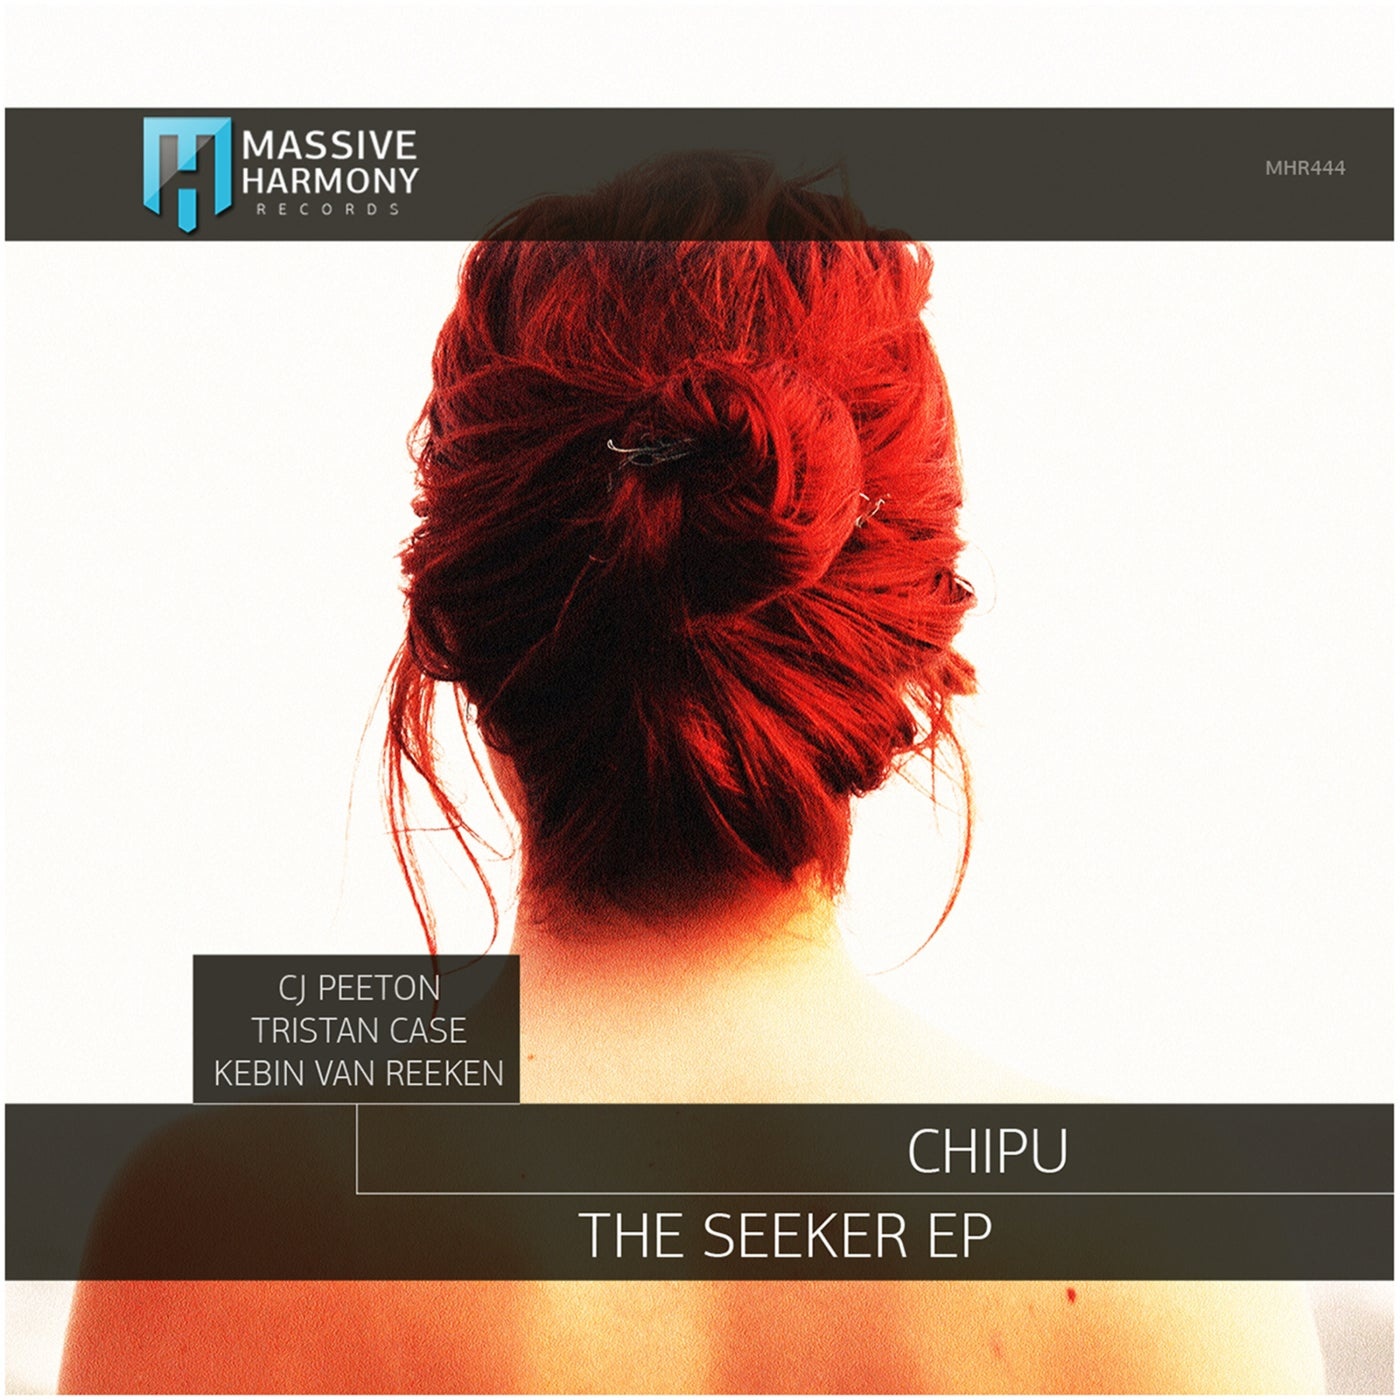 Chipu - The Seeker [MHR444]